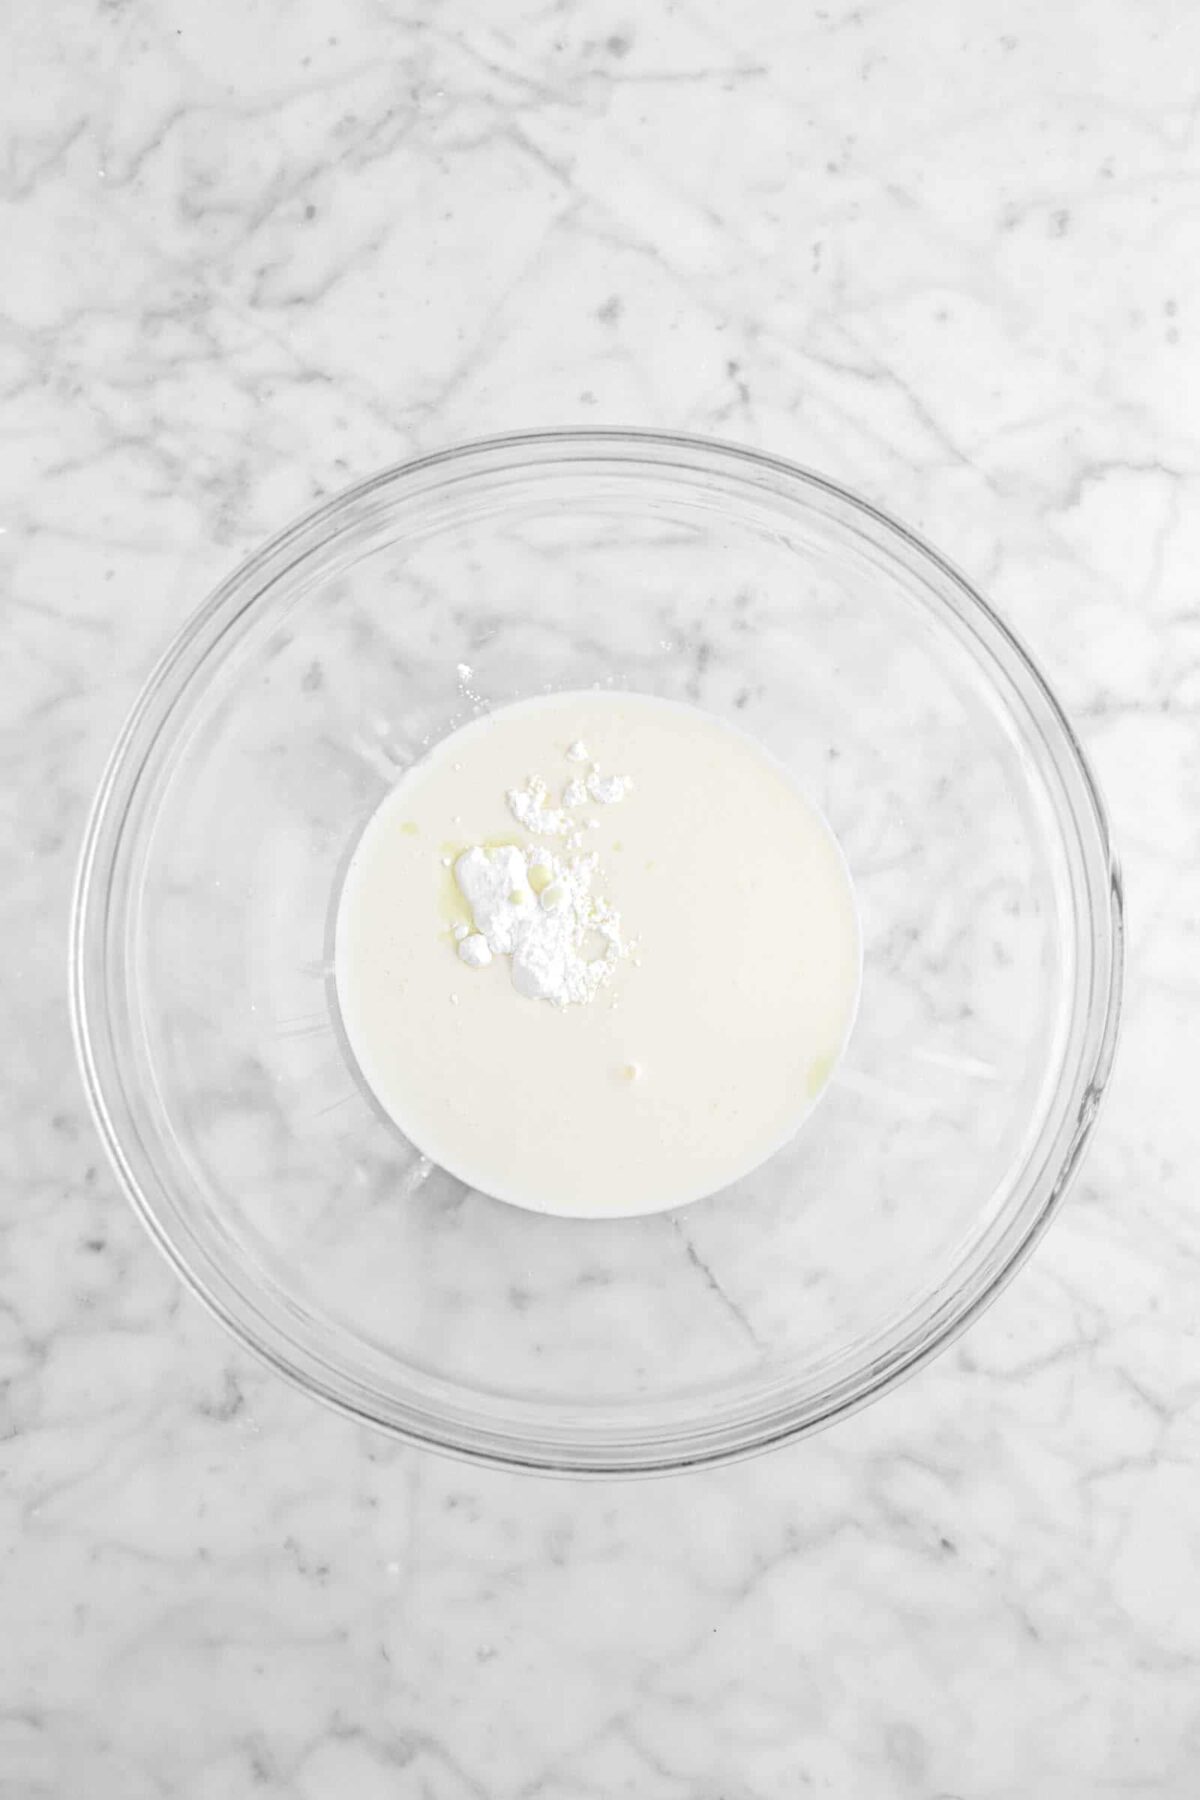 heavy cream, eggnog, and powdered sugar in glass bowl